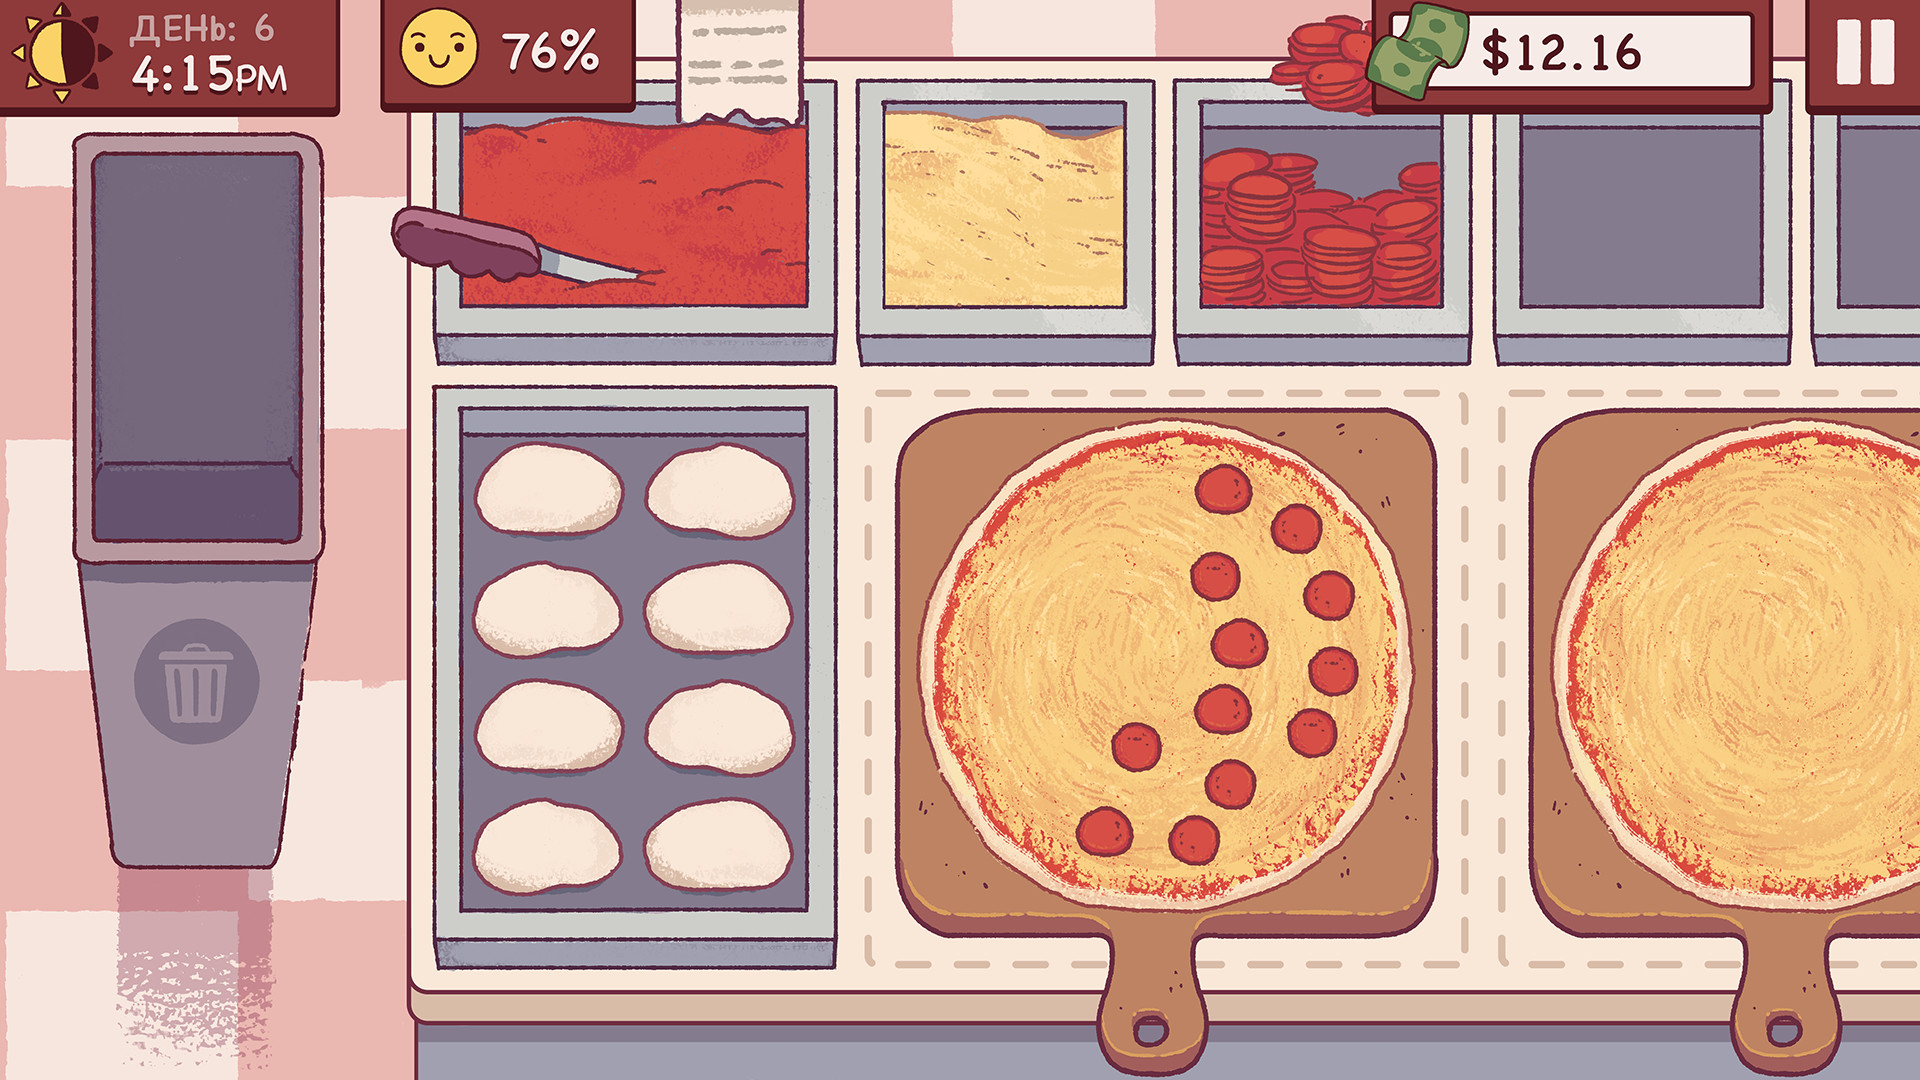 что значит половина от четырех пицц пепперони в игре хорошая пицца (119) фото